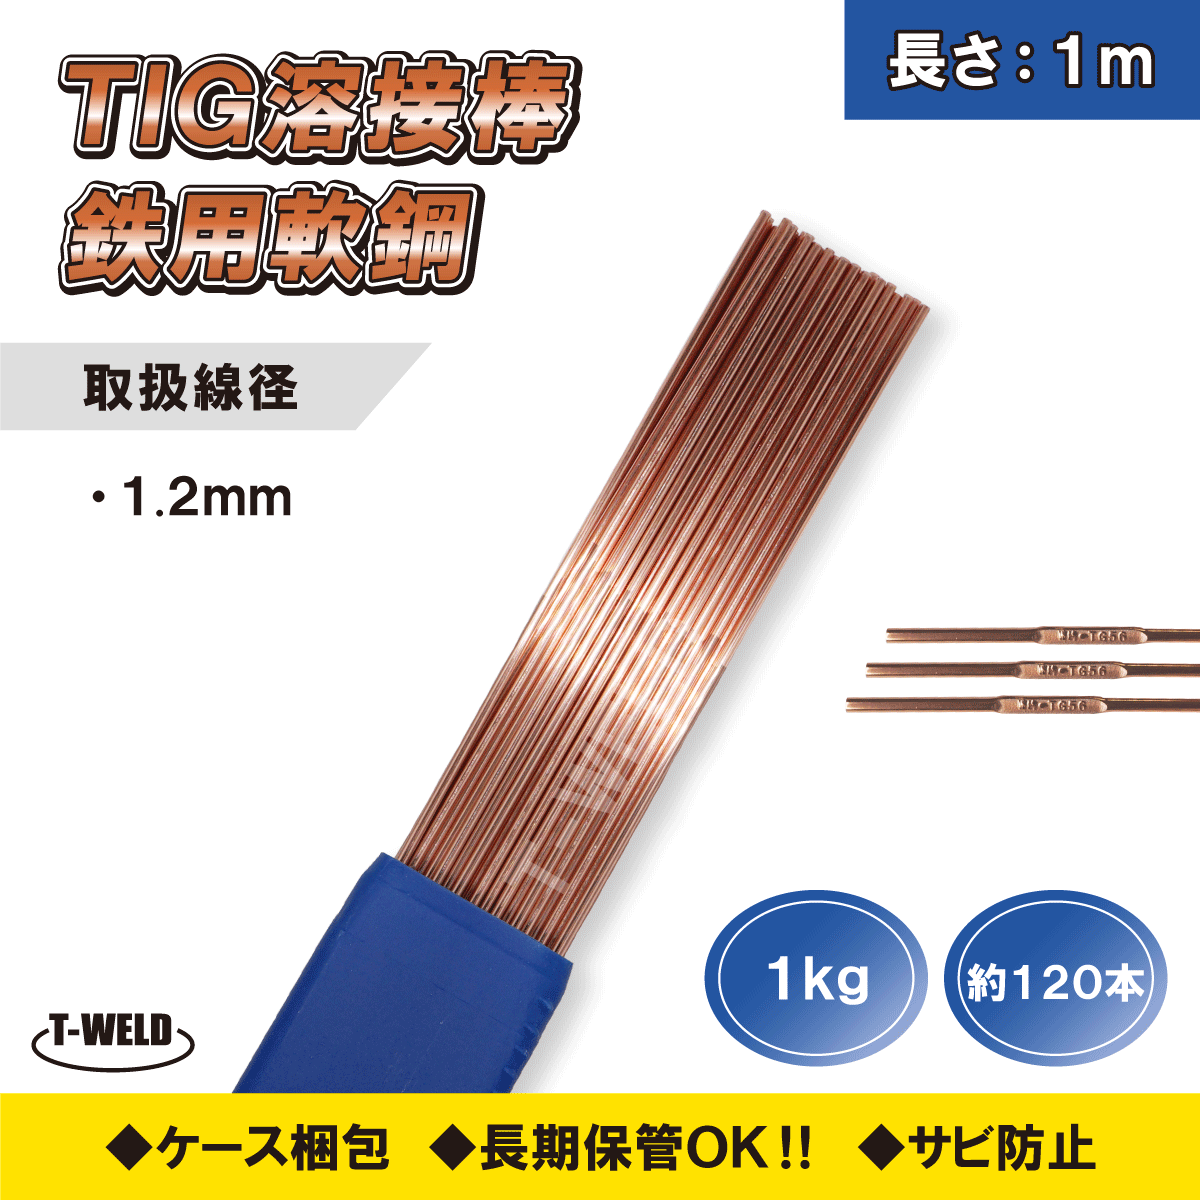 TIG iron for . steel welding stick TG-S50 YT-28 conform 1.2mm×1m 1kg